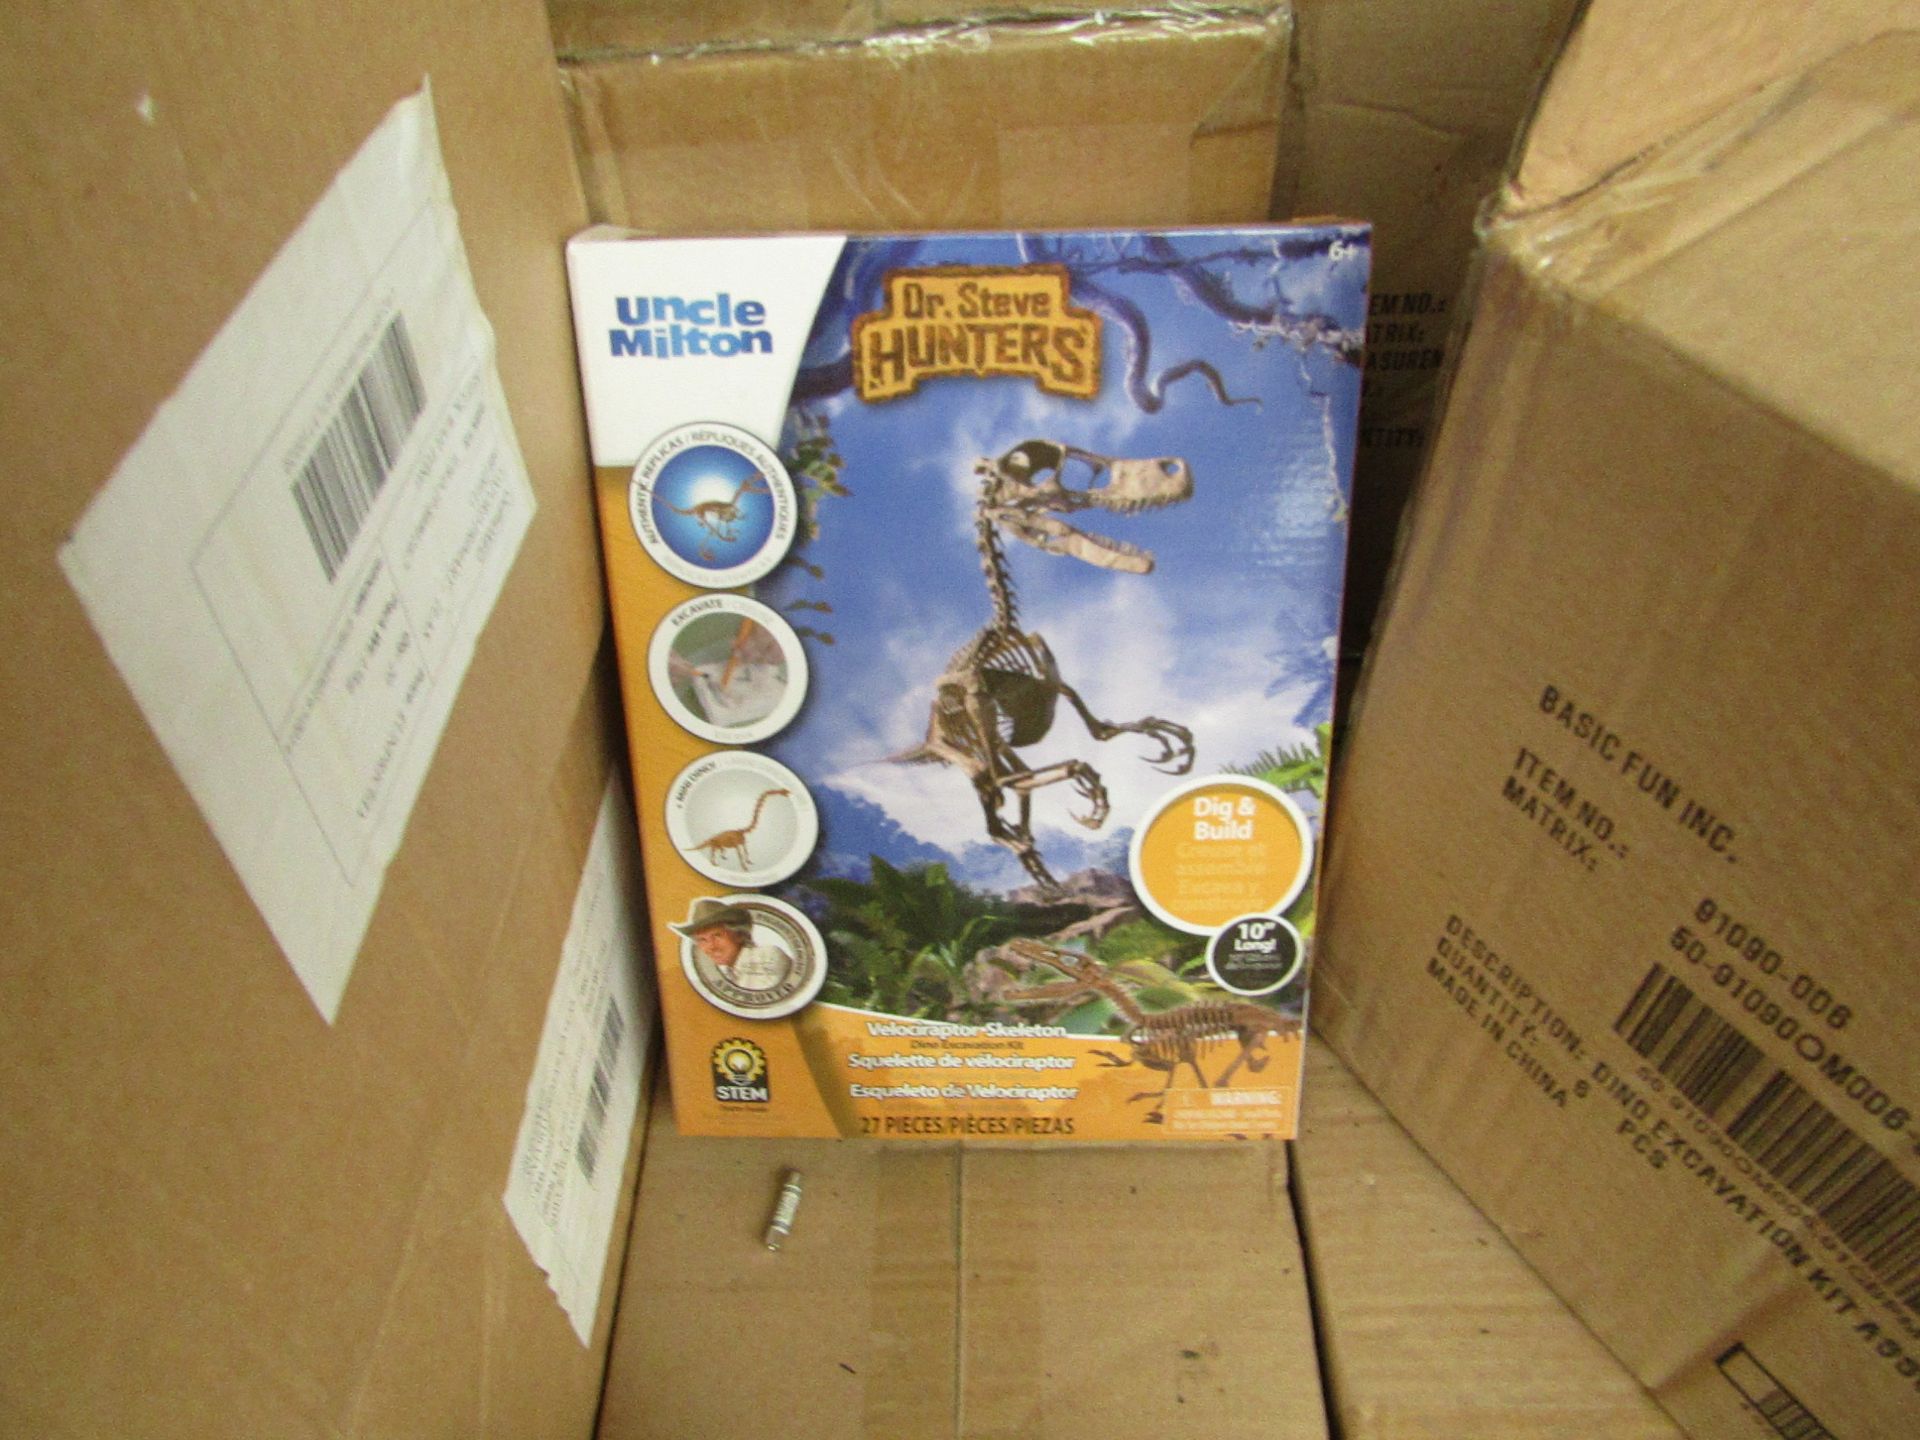 Uncle Milton - Dr. Steve Hunters - Dinoasaur Excavation Kit Assortment - New & Boxed.